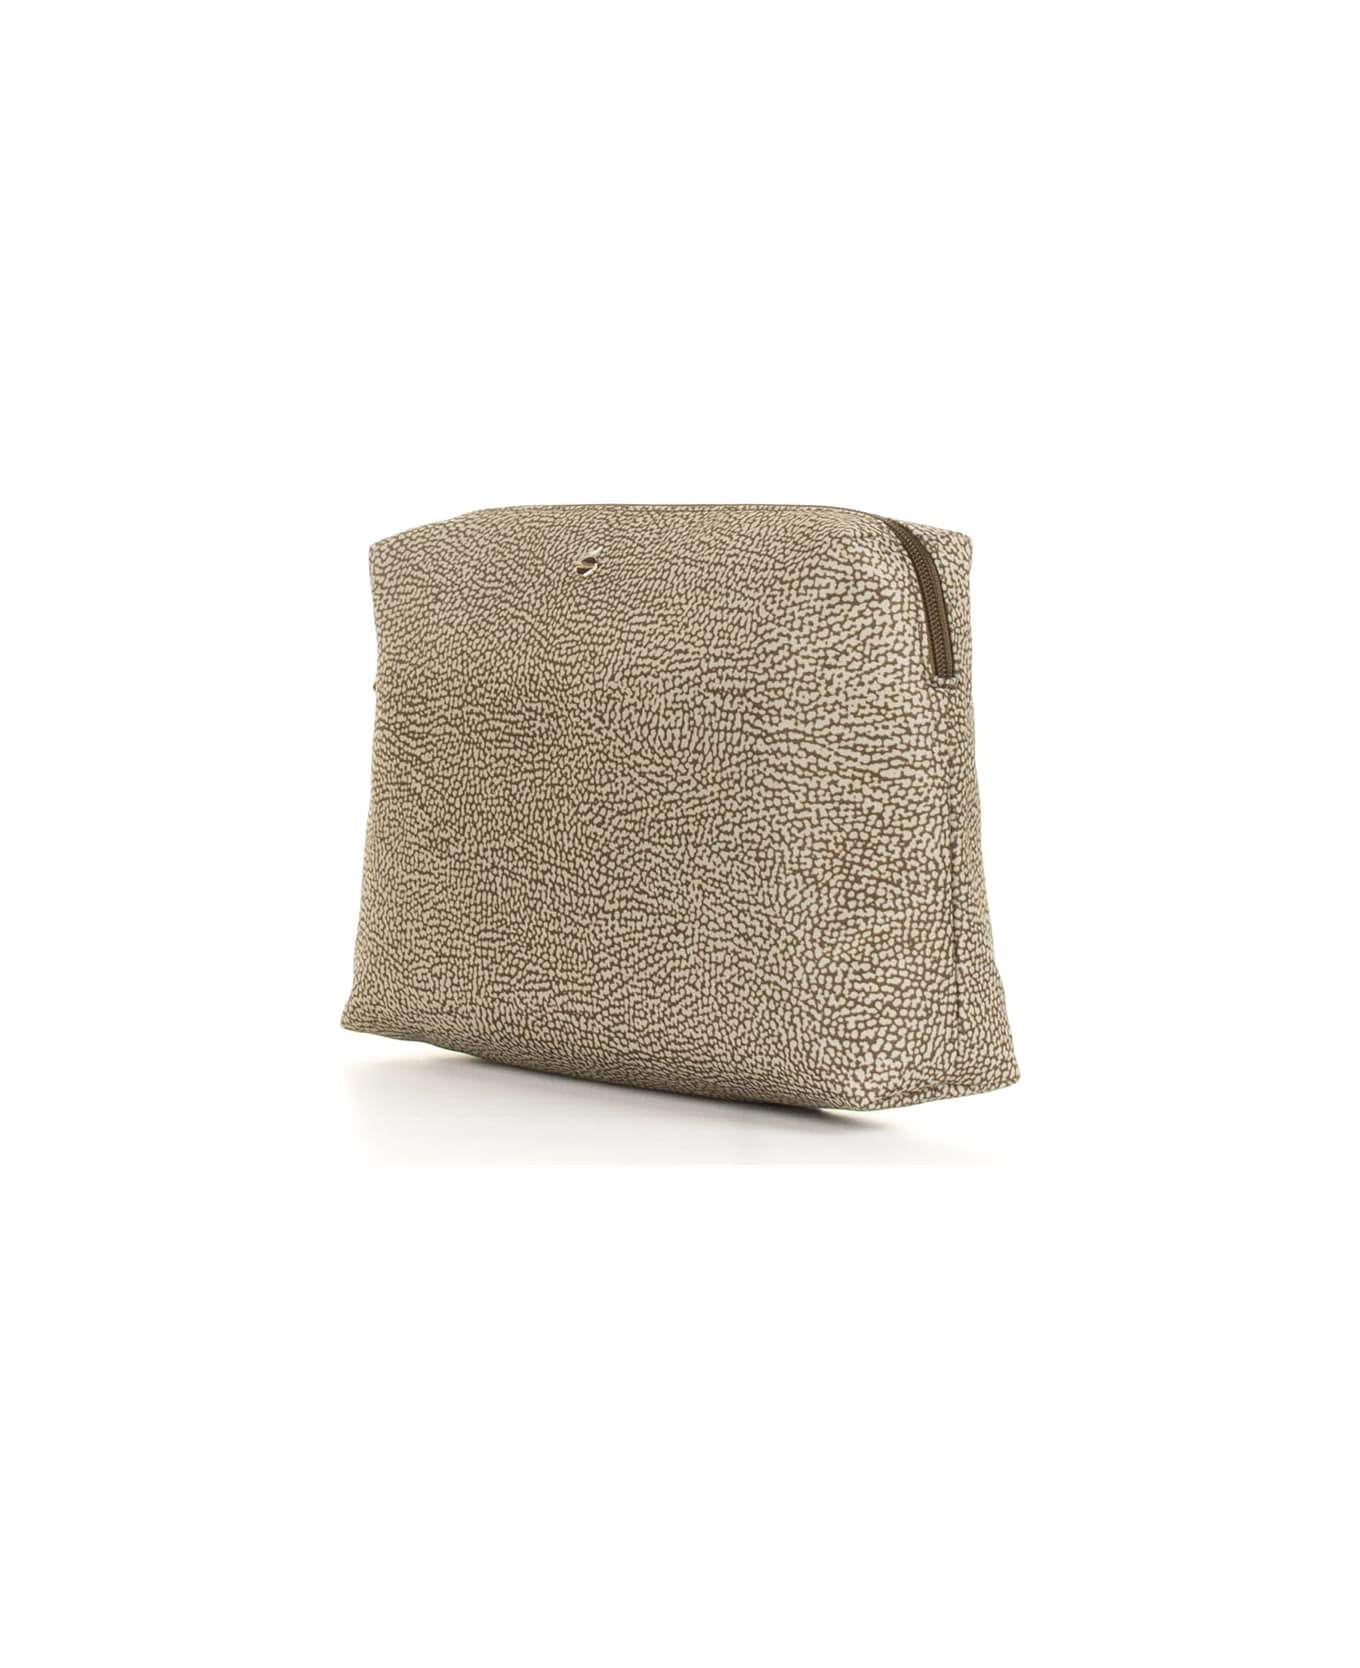 Borbonese Medium Clutch Bag In Op Fabric And Leather - BEIGE/MARRONE